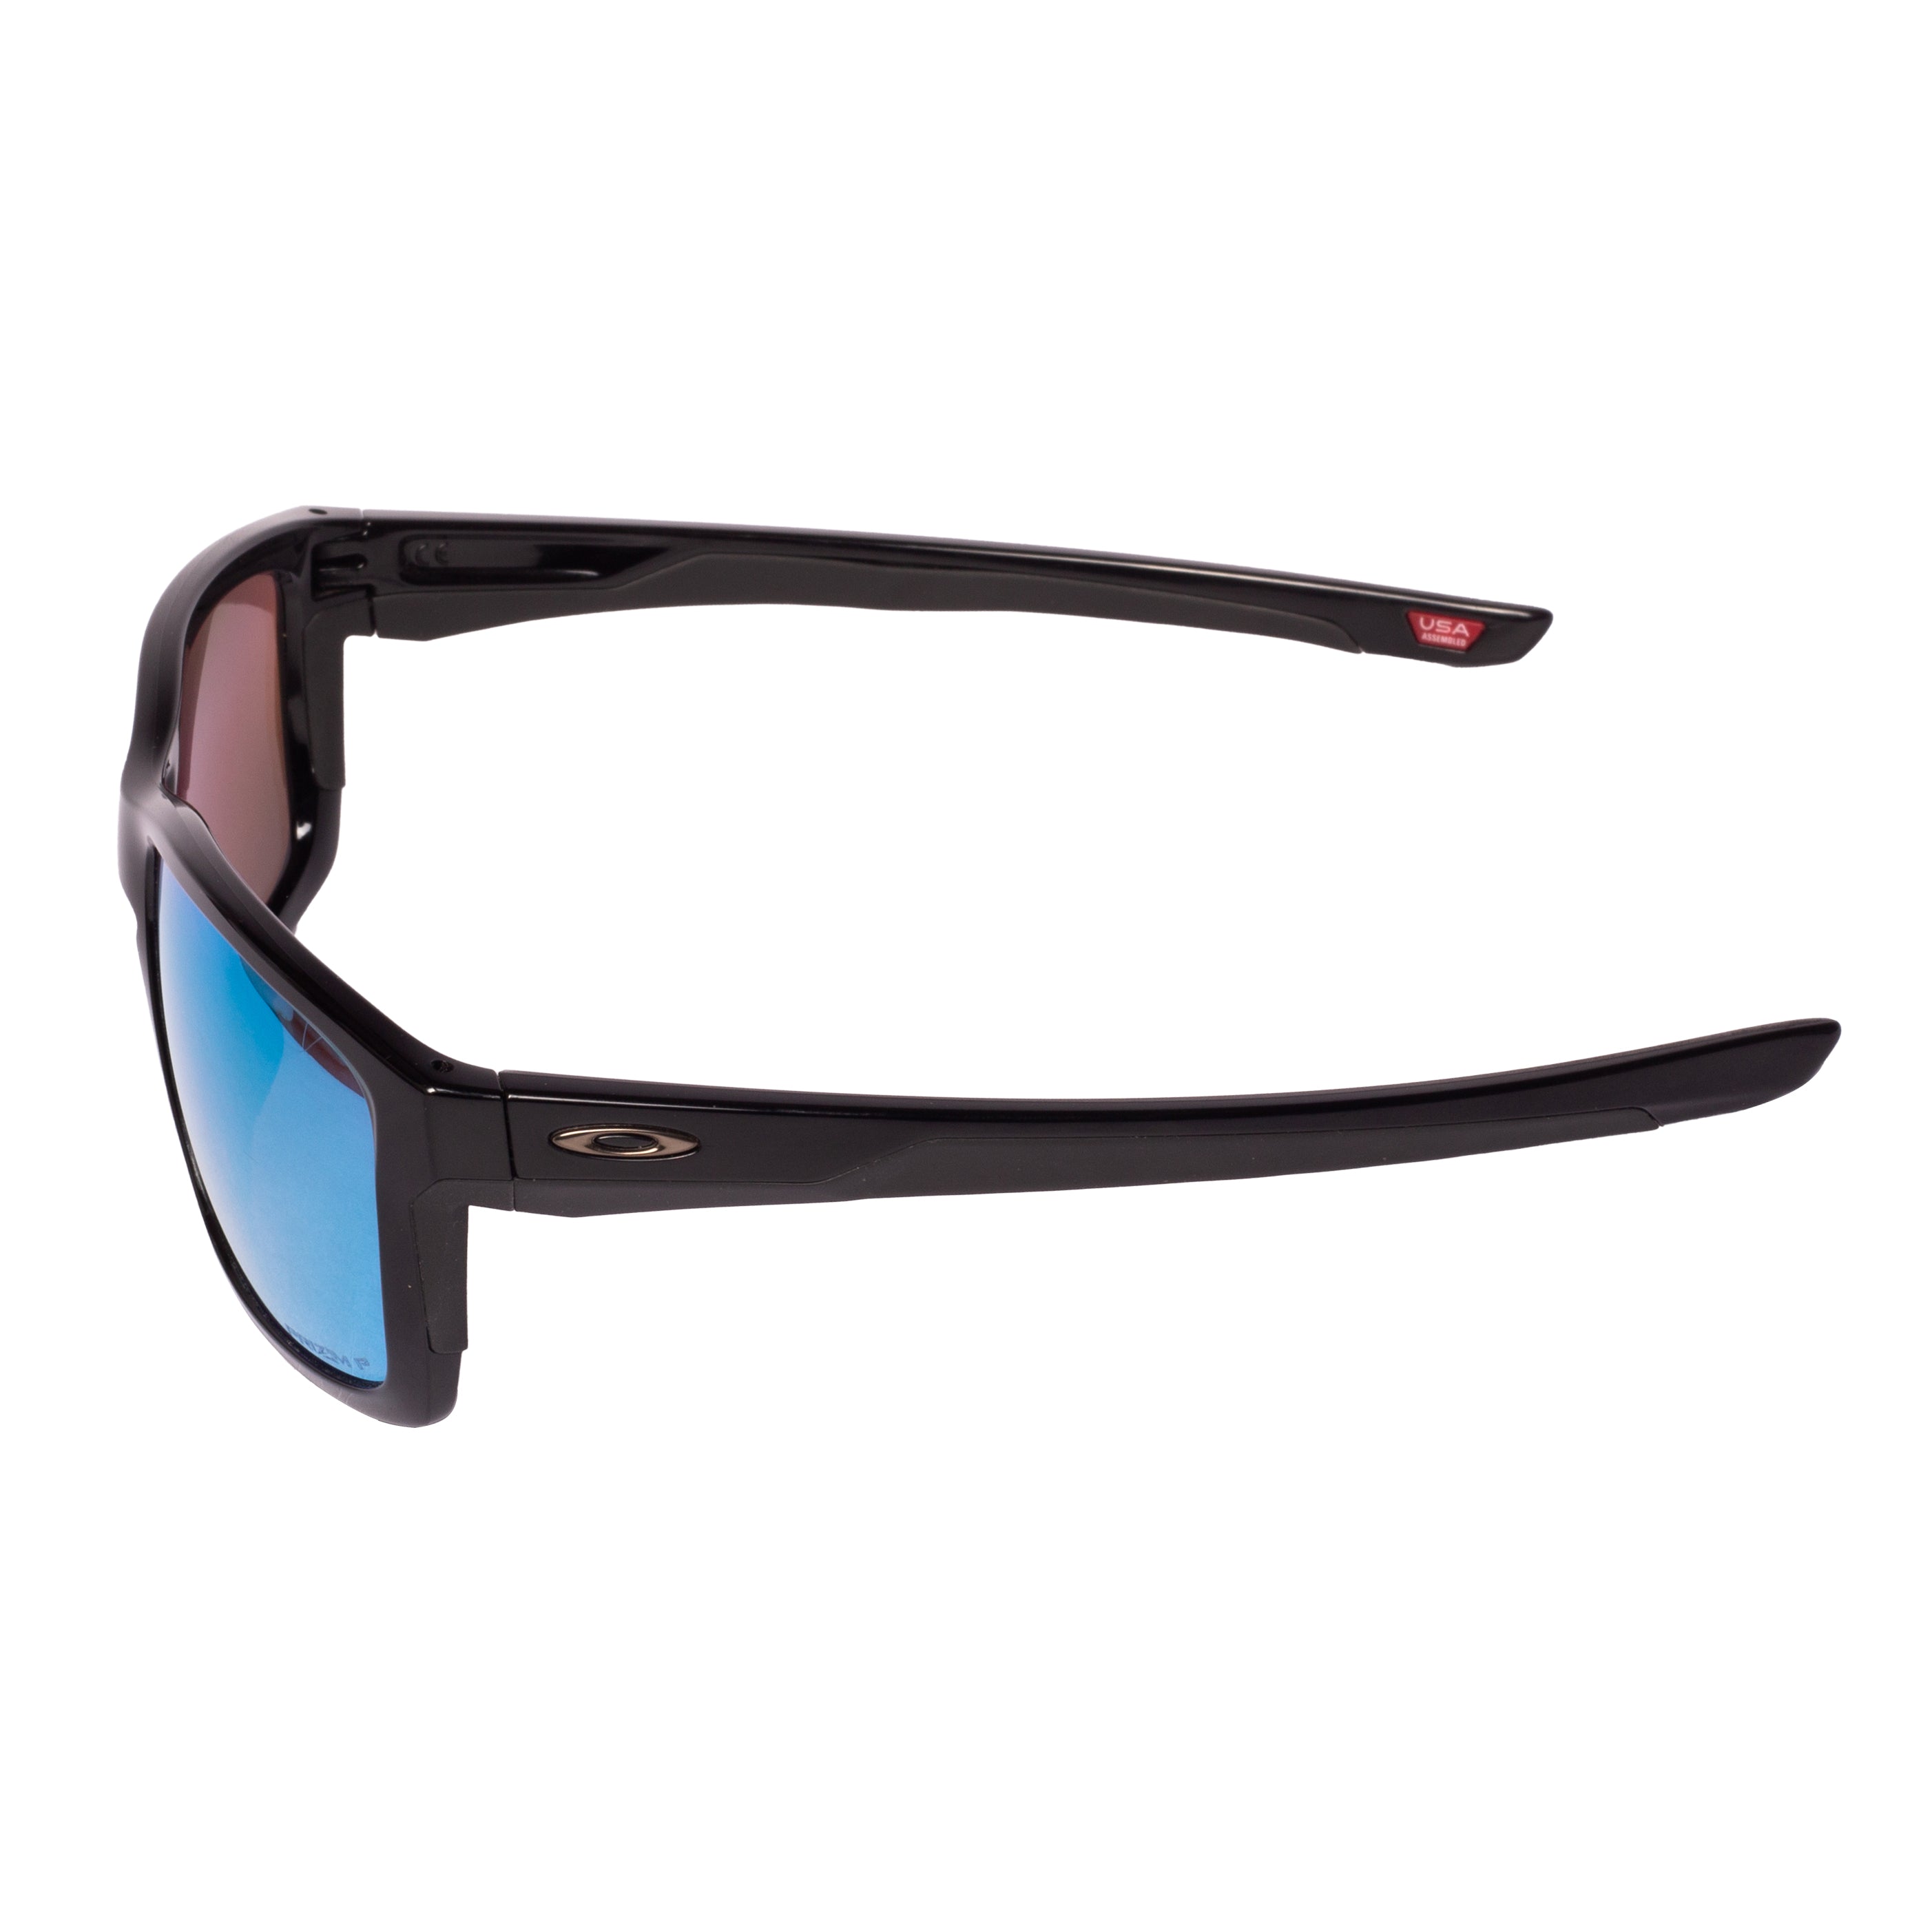 Oakley-OO9264-61-4761 Sunglasses - Premium Sunglasses from Oakley - Just Rs. 10790! Shop now at Laxmi Opticians